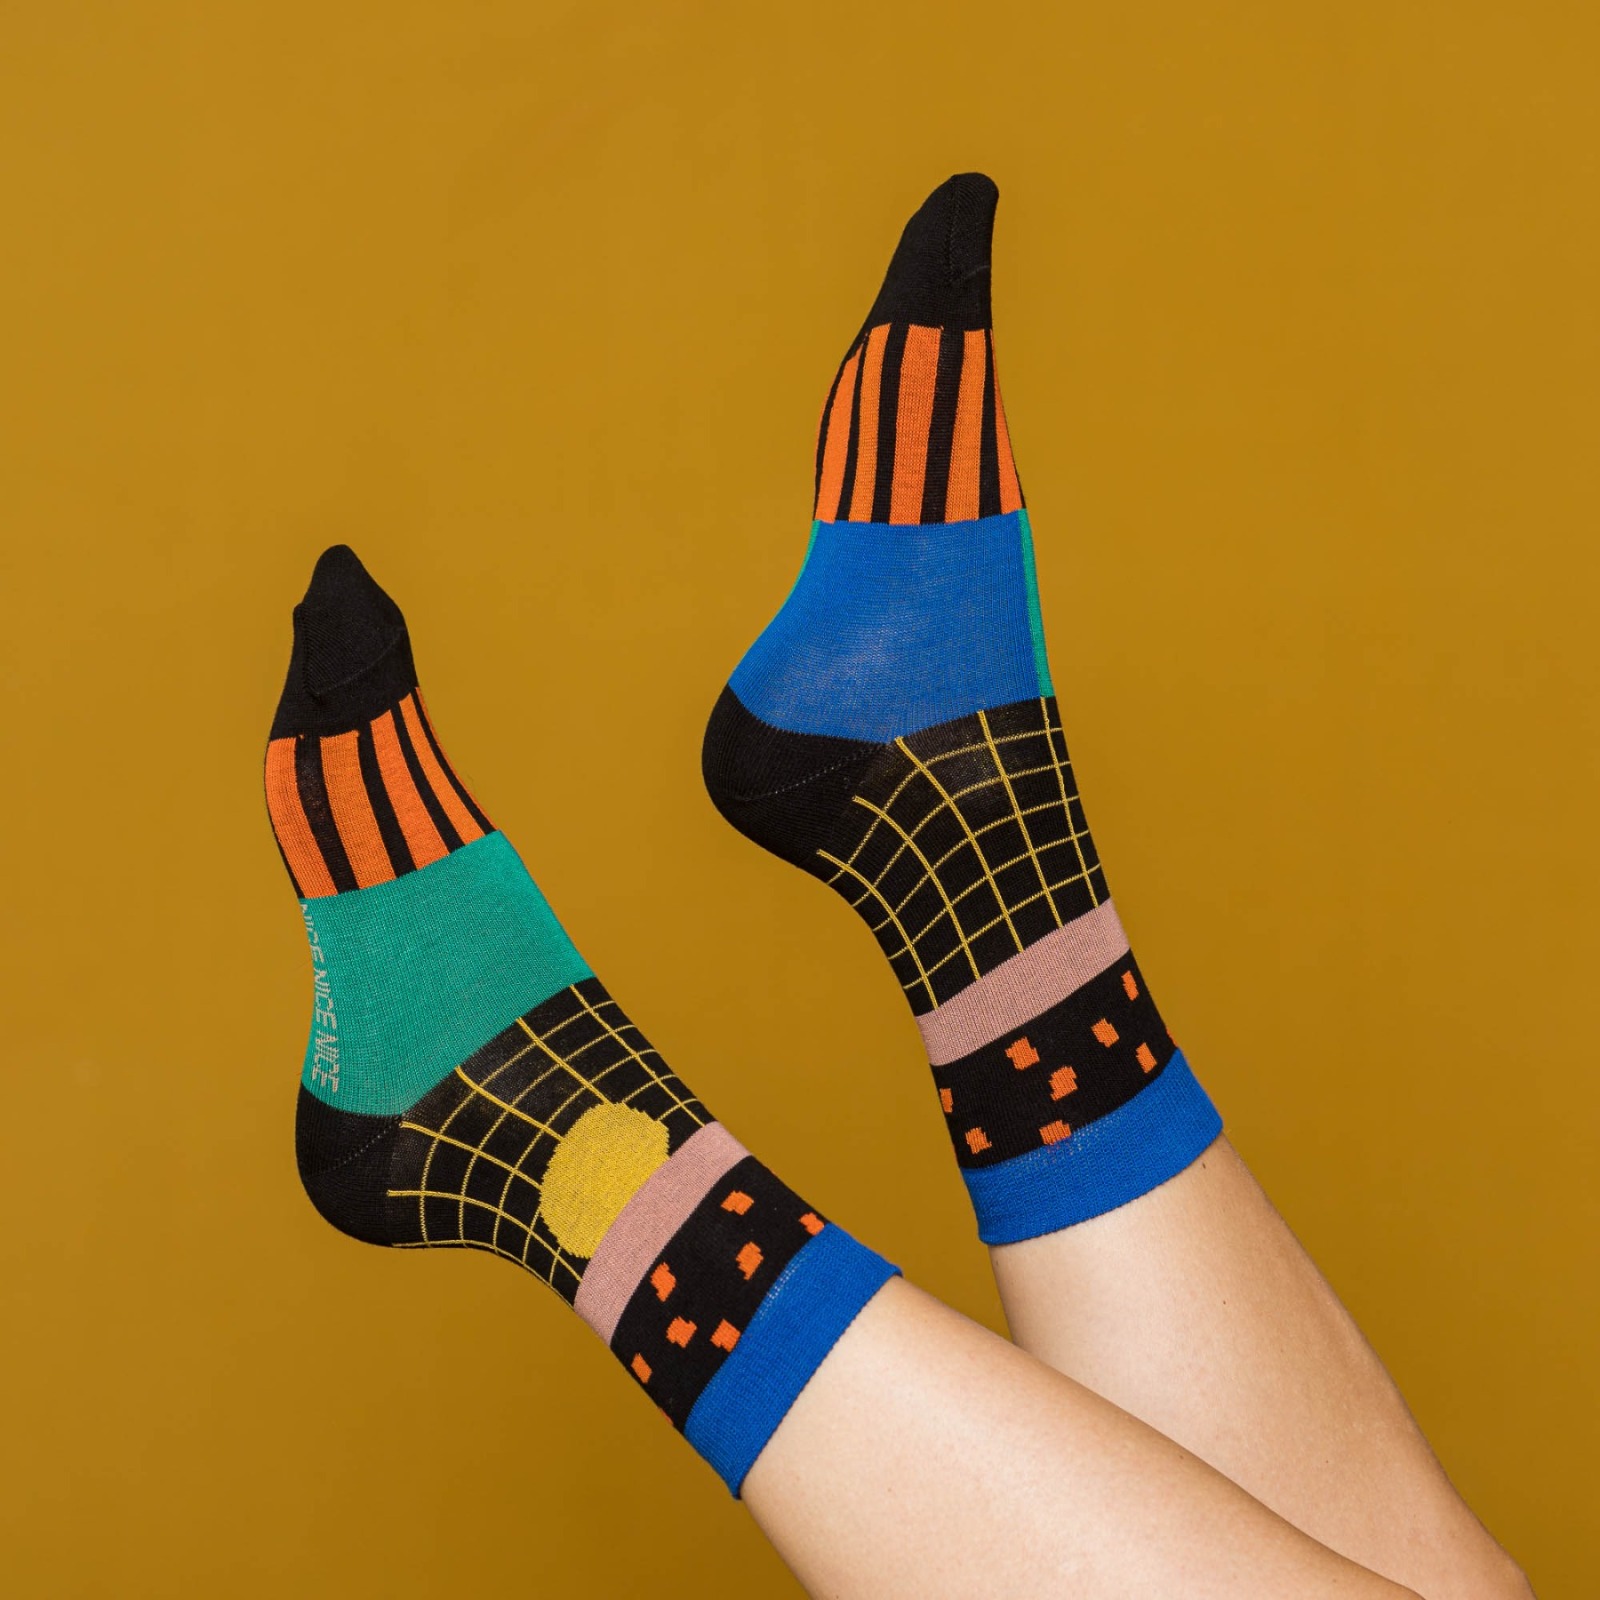 nicenicenice - nice socks pattern black 5